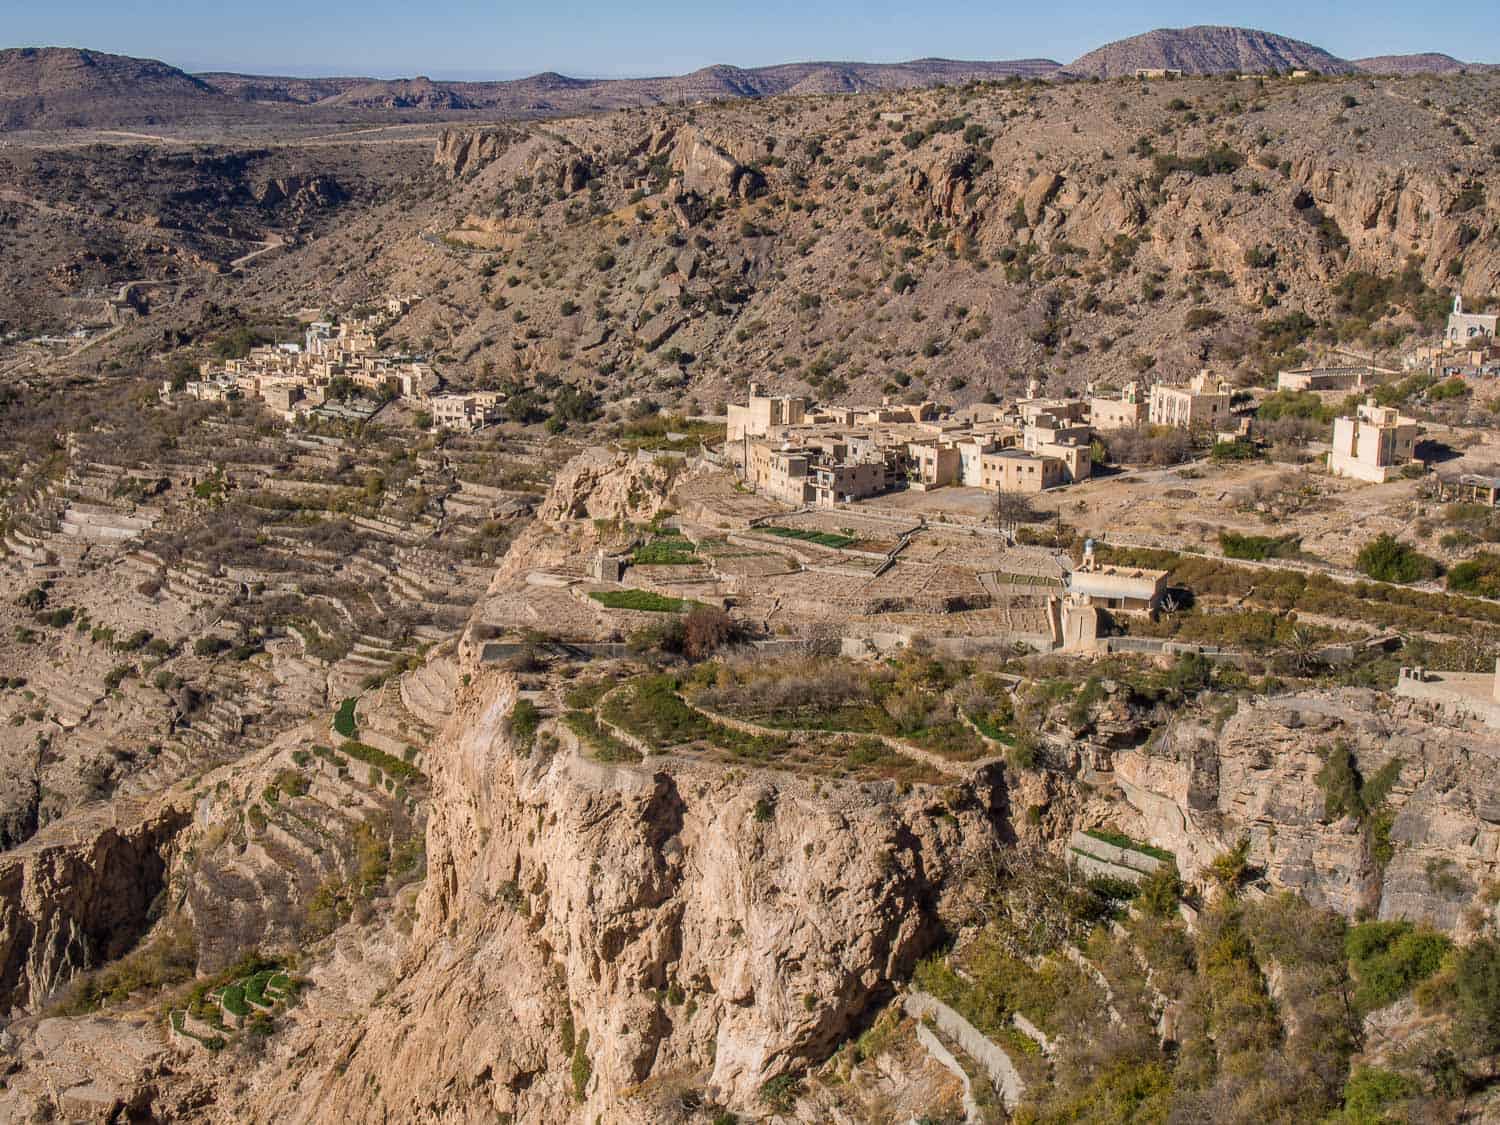 Rugged terrain and village surrounding Jebel Akhdar, Oman